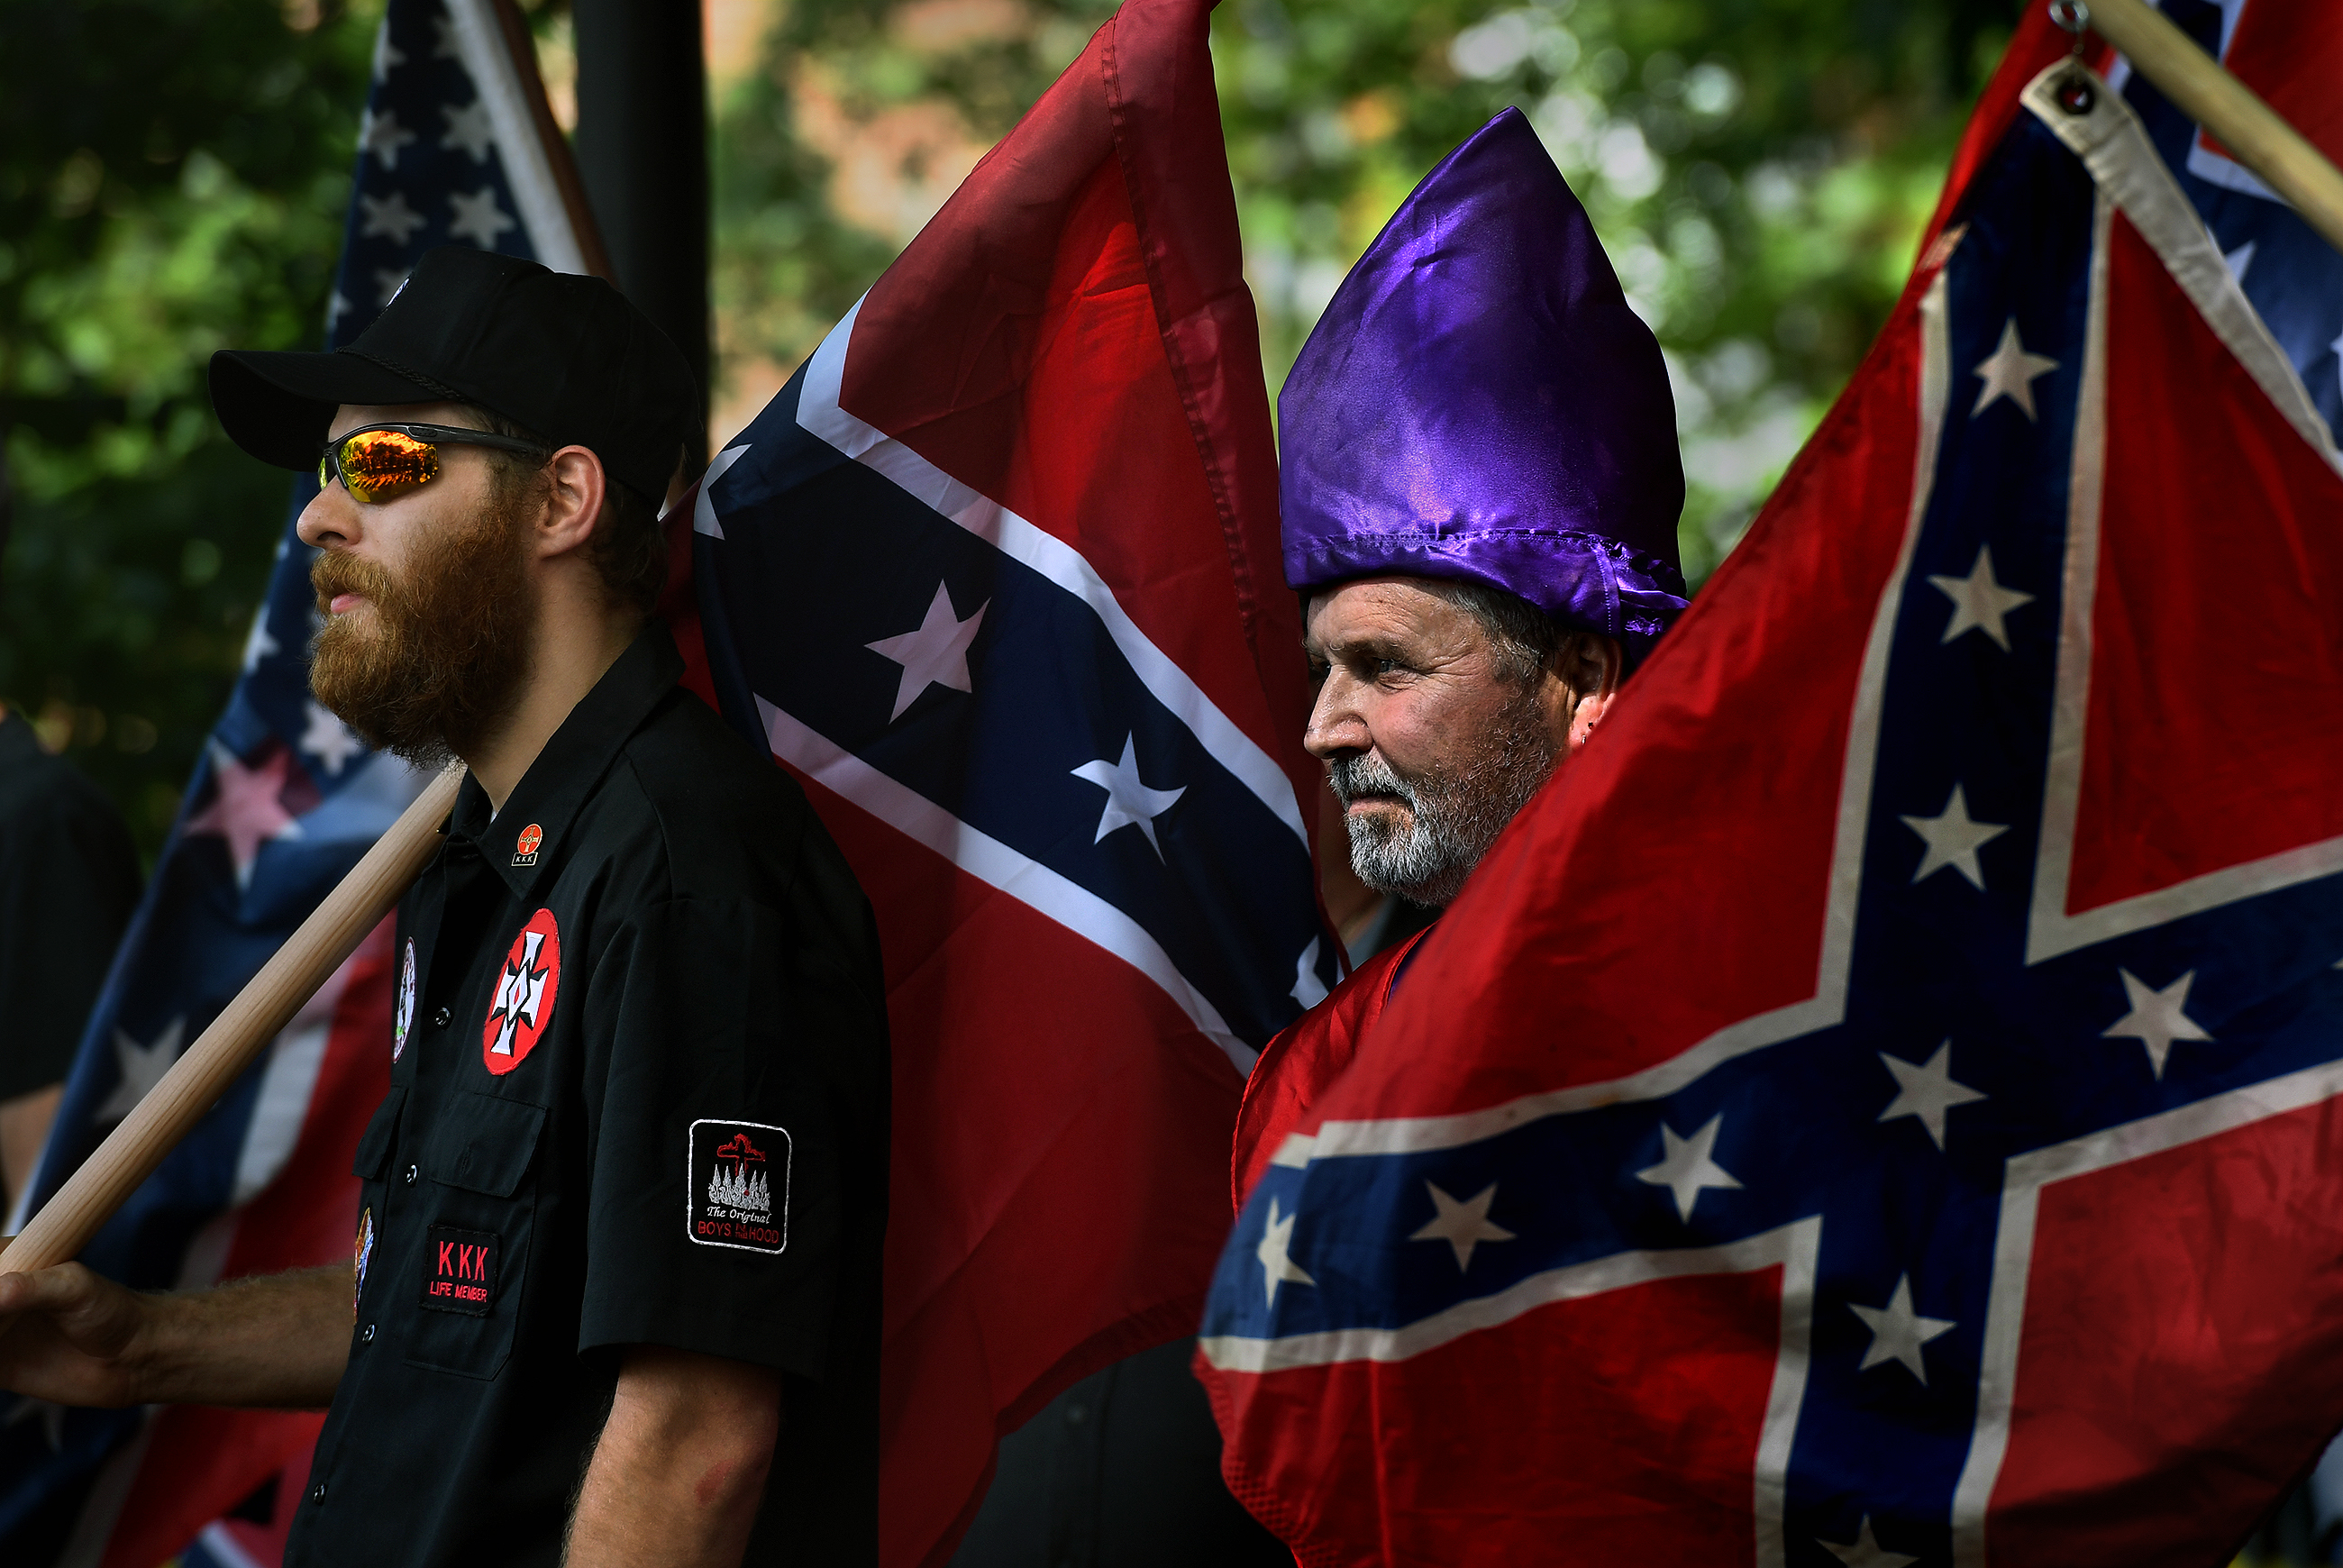 KKK members watch as anti-KKK groups chanted against them. (Michael S. Williamson&mdash;The Washington Post/Getty Images)